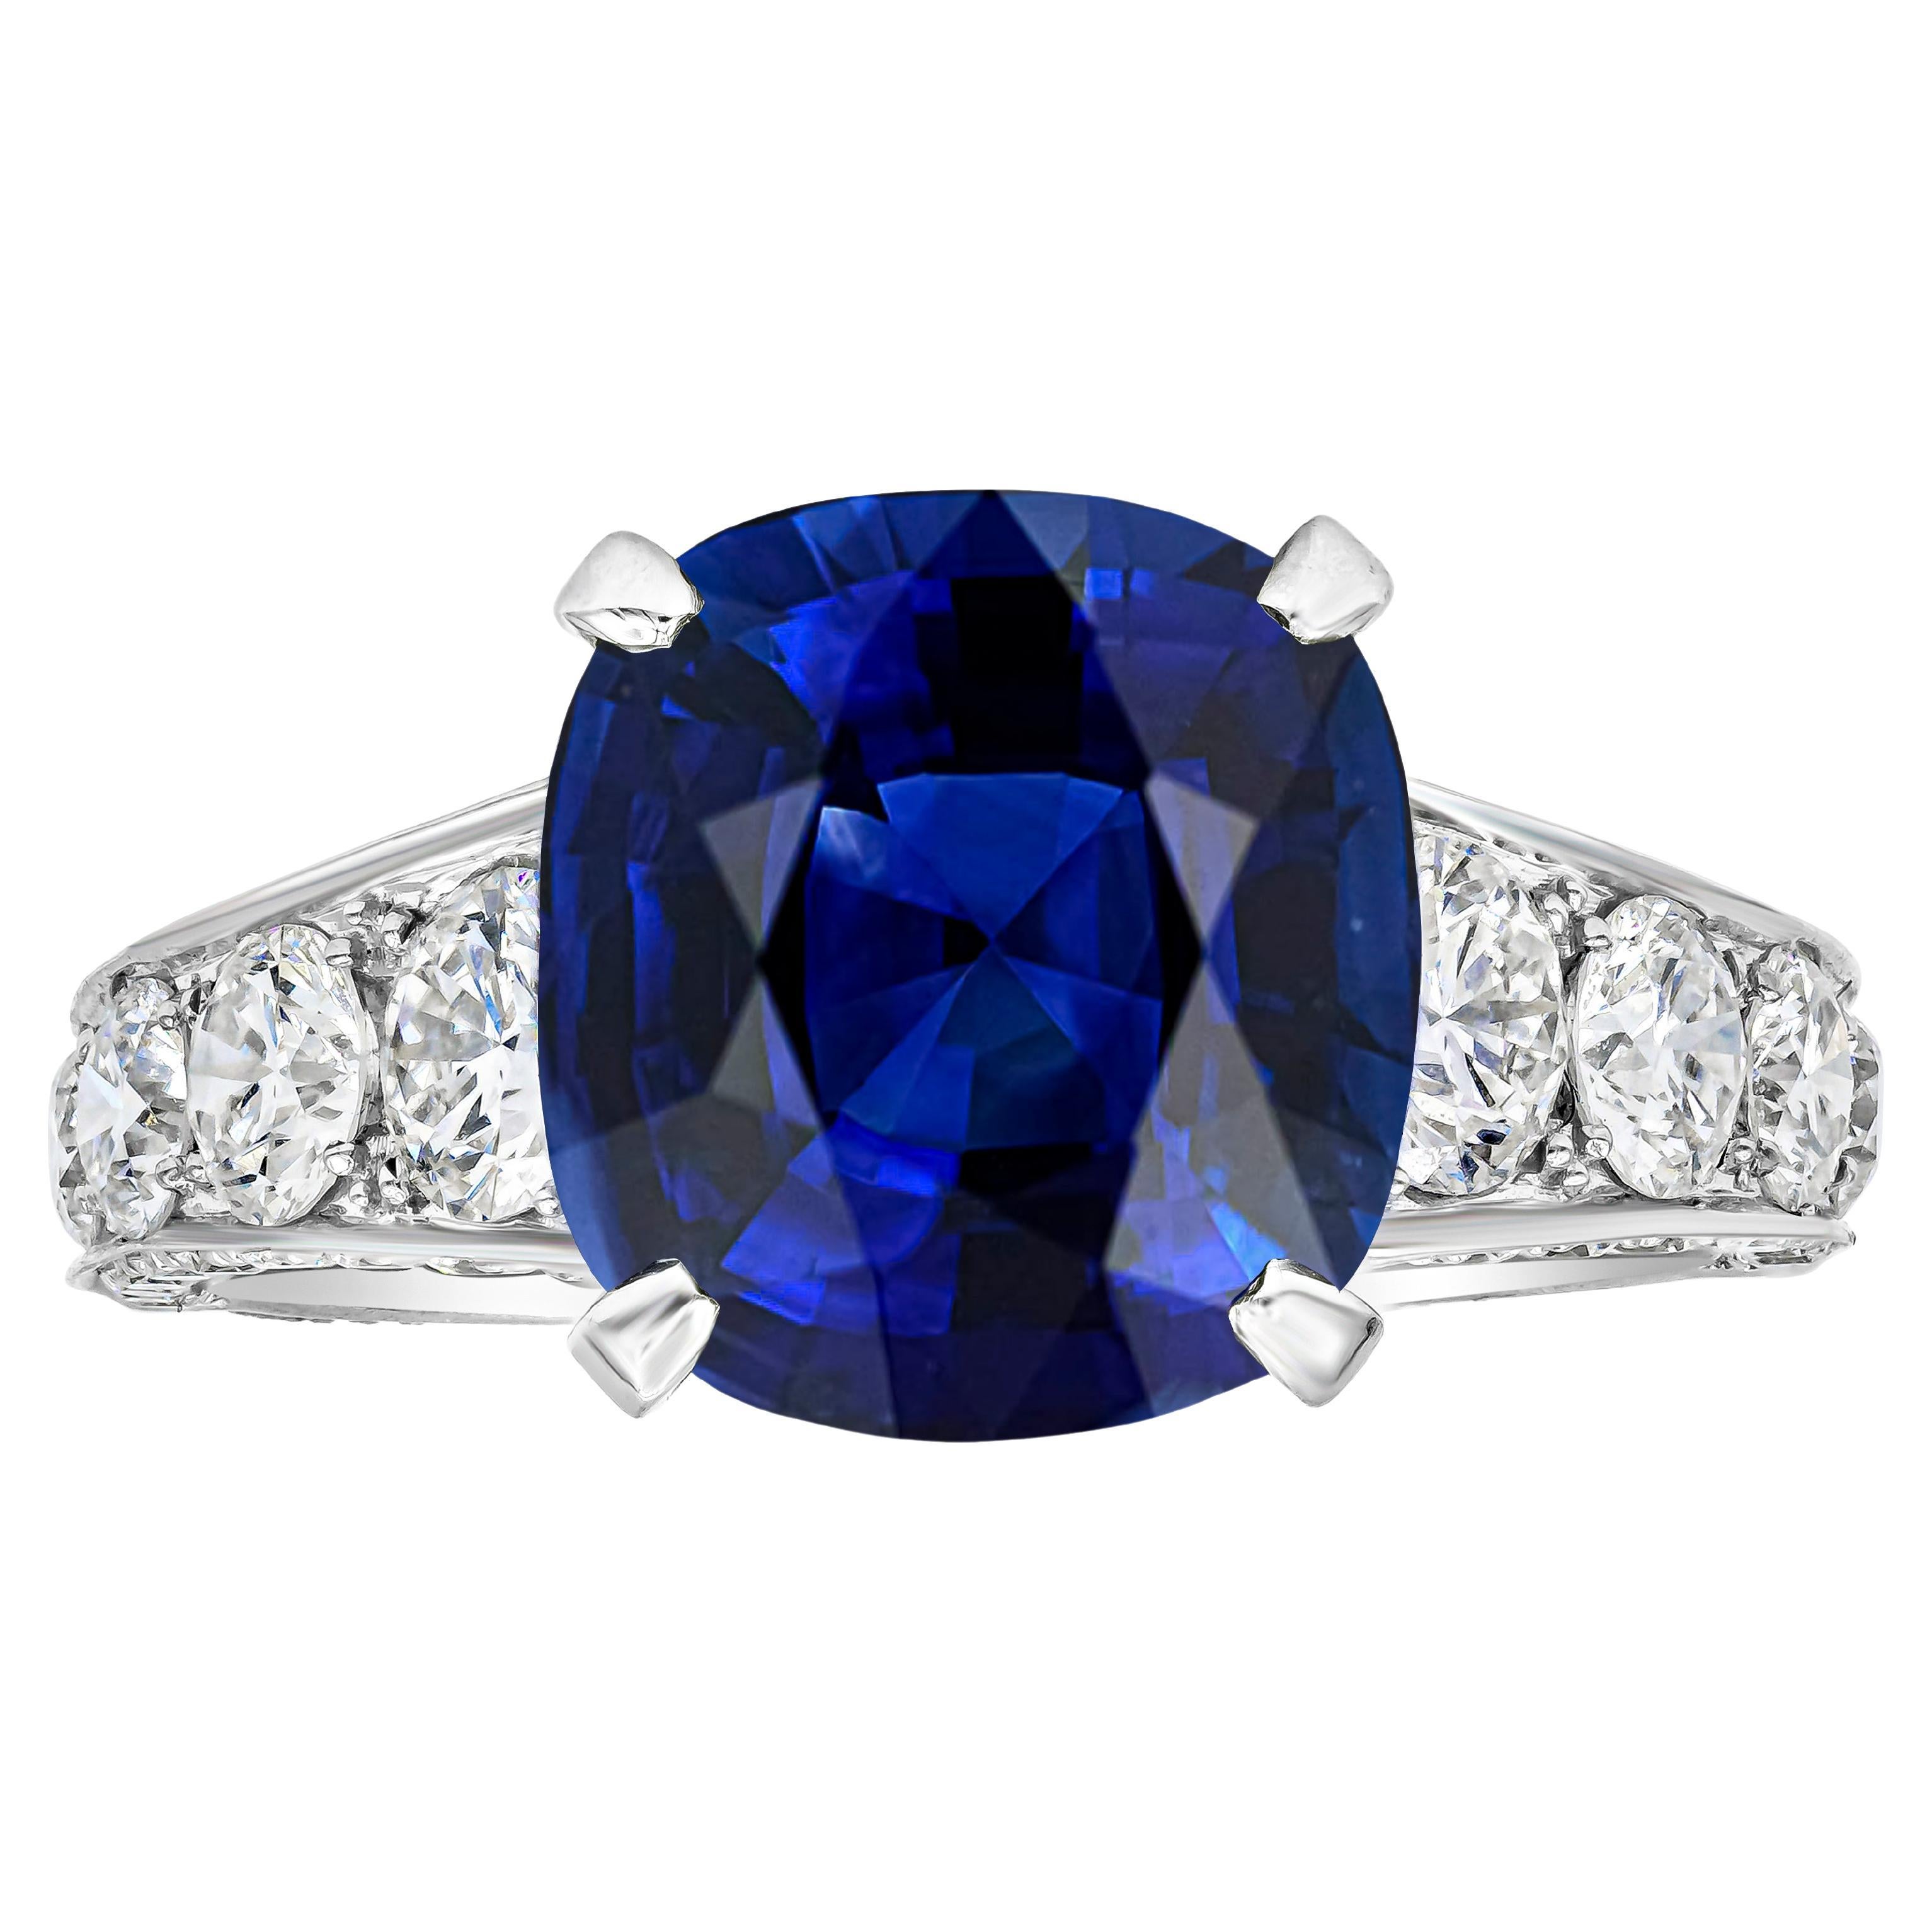 Roman Malakov 7.66 Carats Cushion Cut Blue Sapphire and Diamond Engagement Ring For Sale